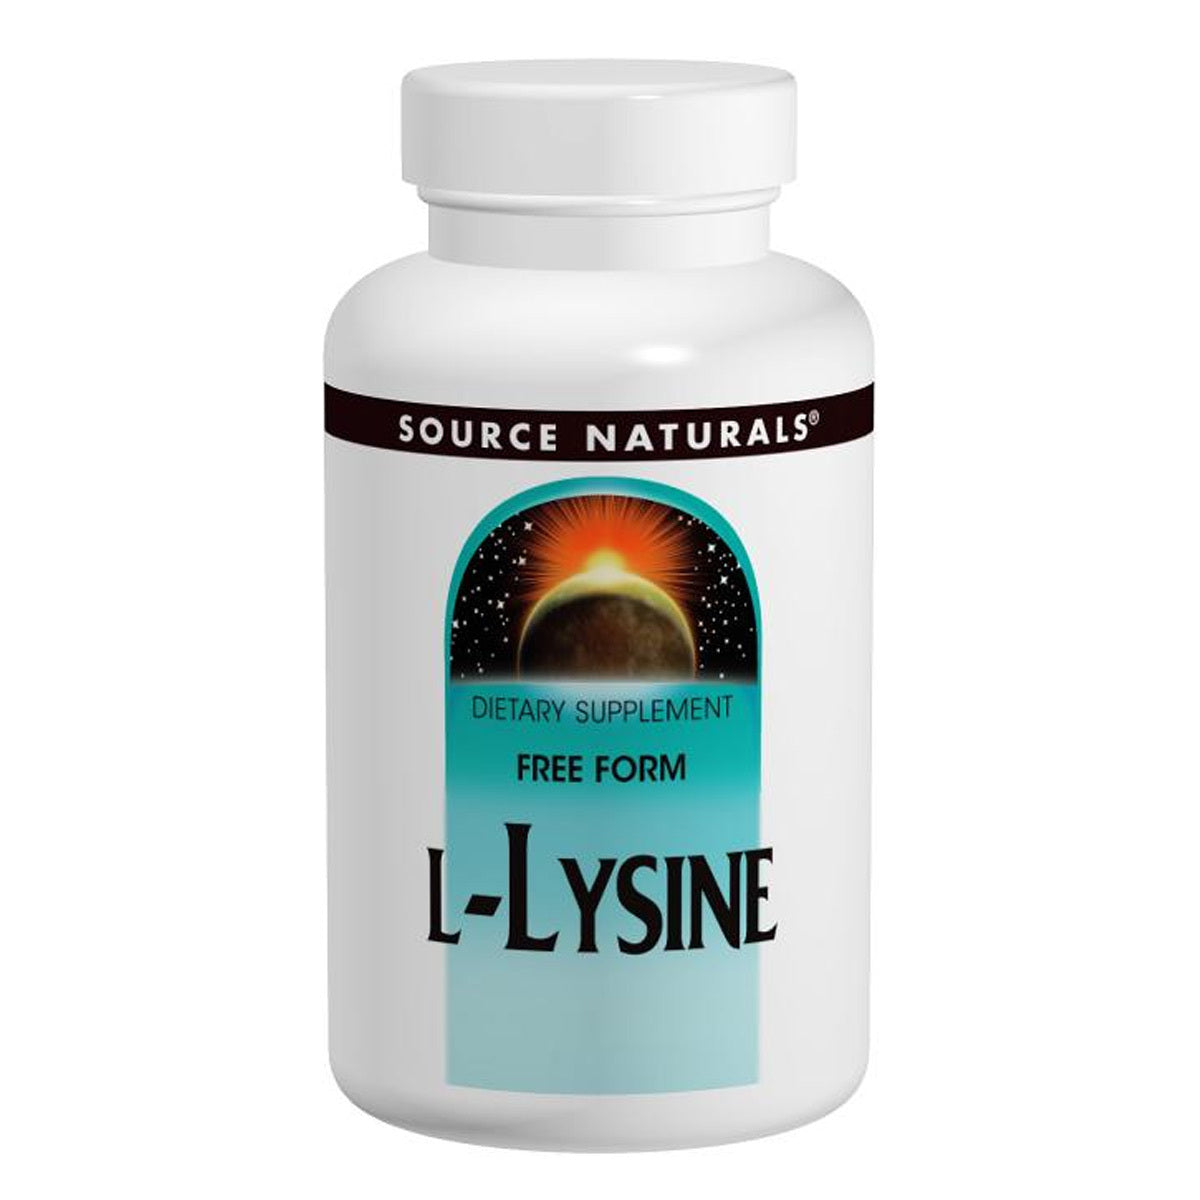 Primary image of L-Lysine 1000mg